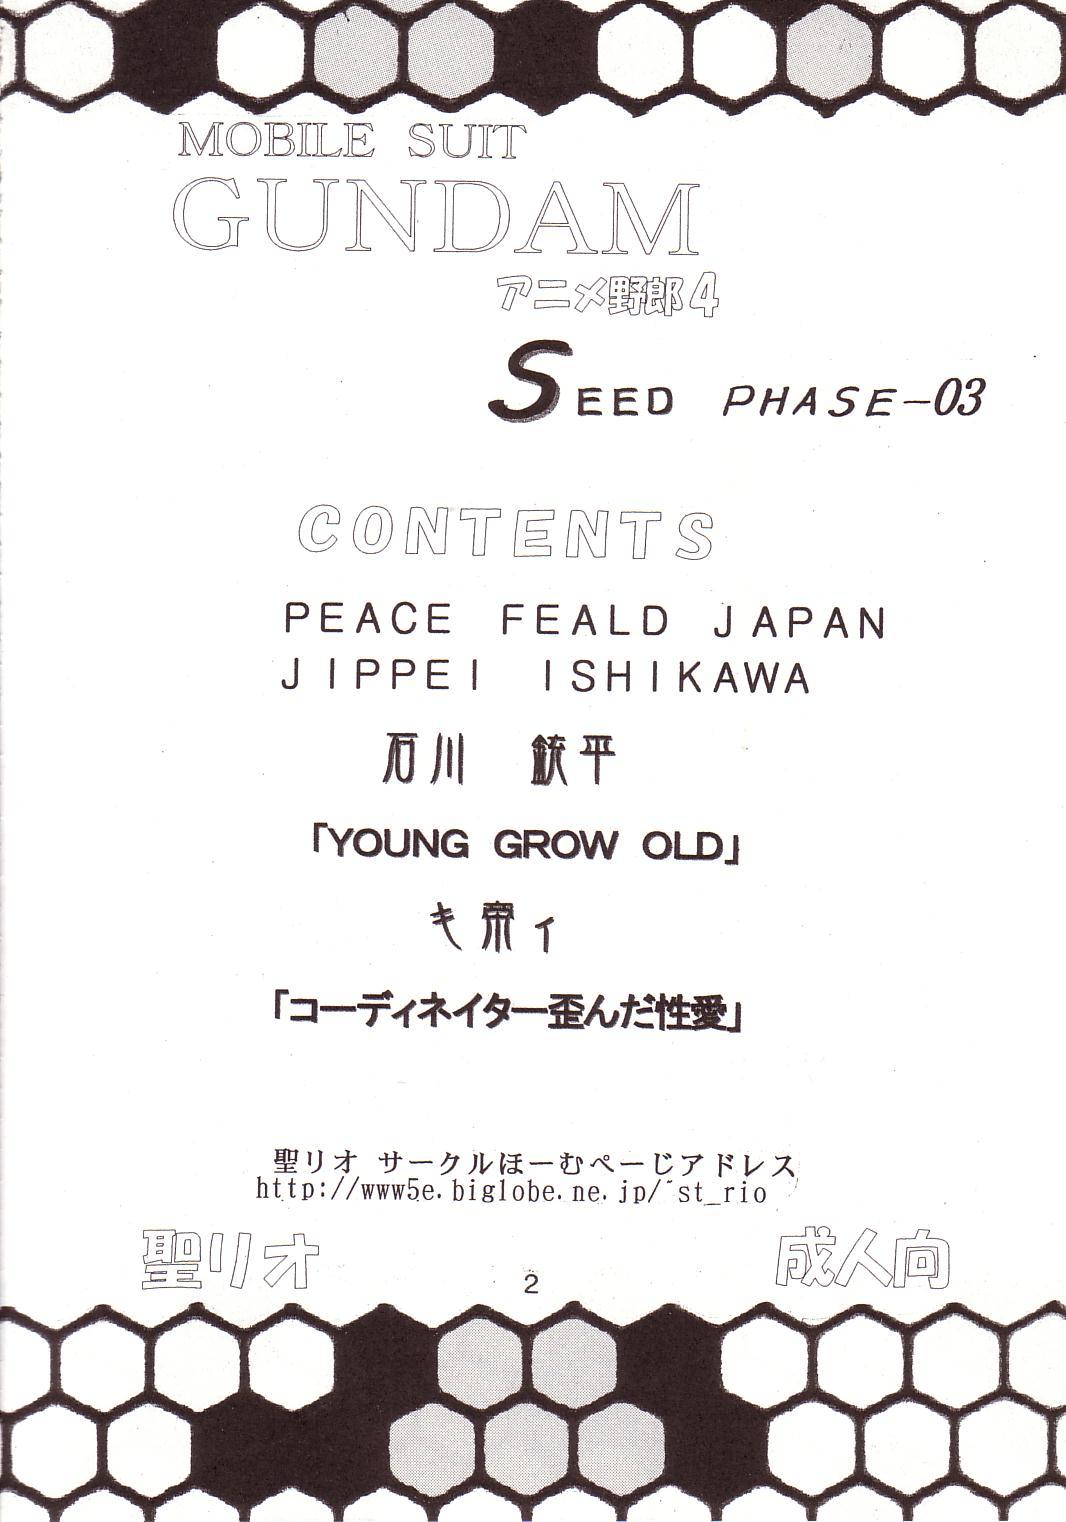 [St. Rio] Seed Phase 03 [Gundam Seed] 